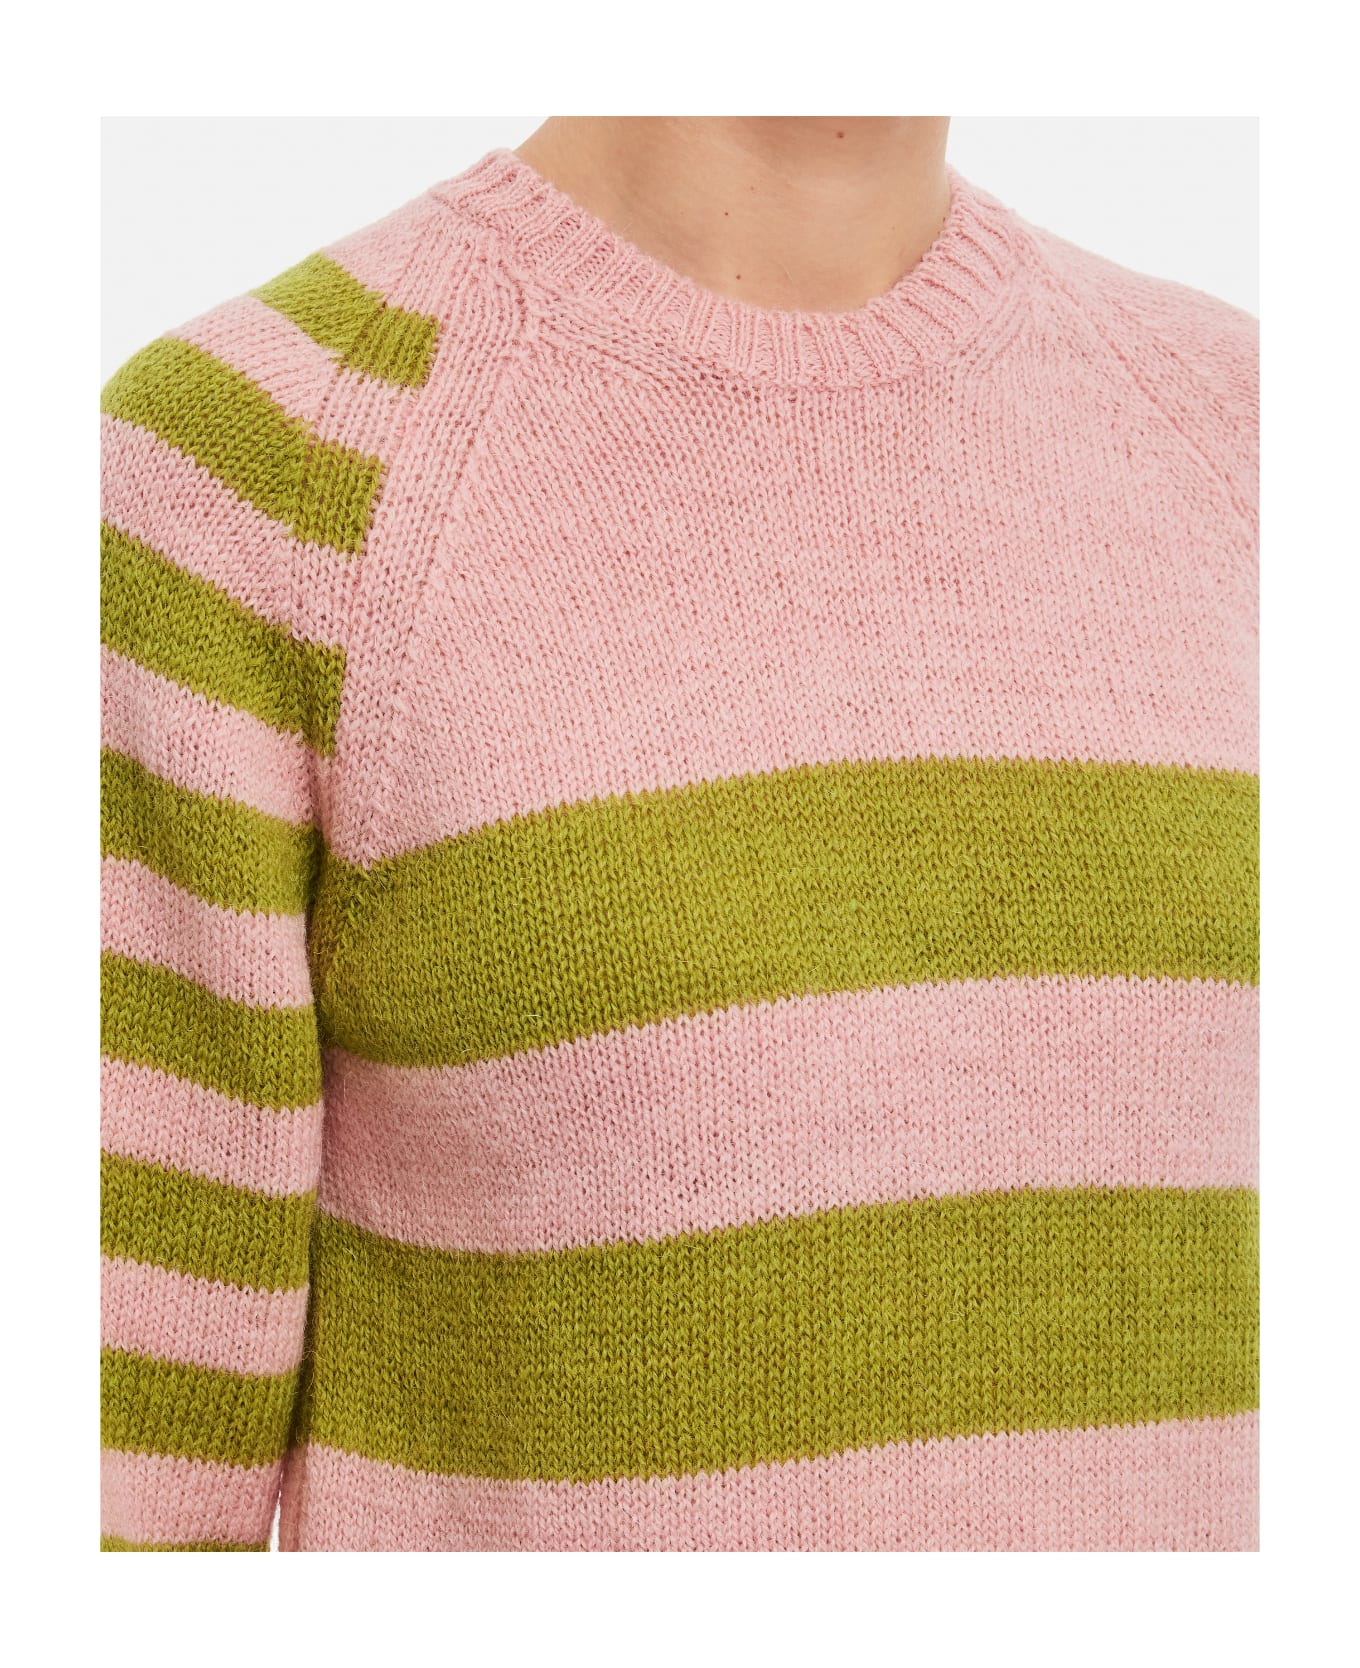 Molly Goddard Ines Wool Sweater - Pink